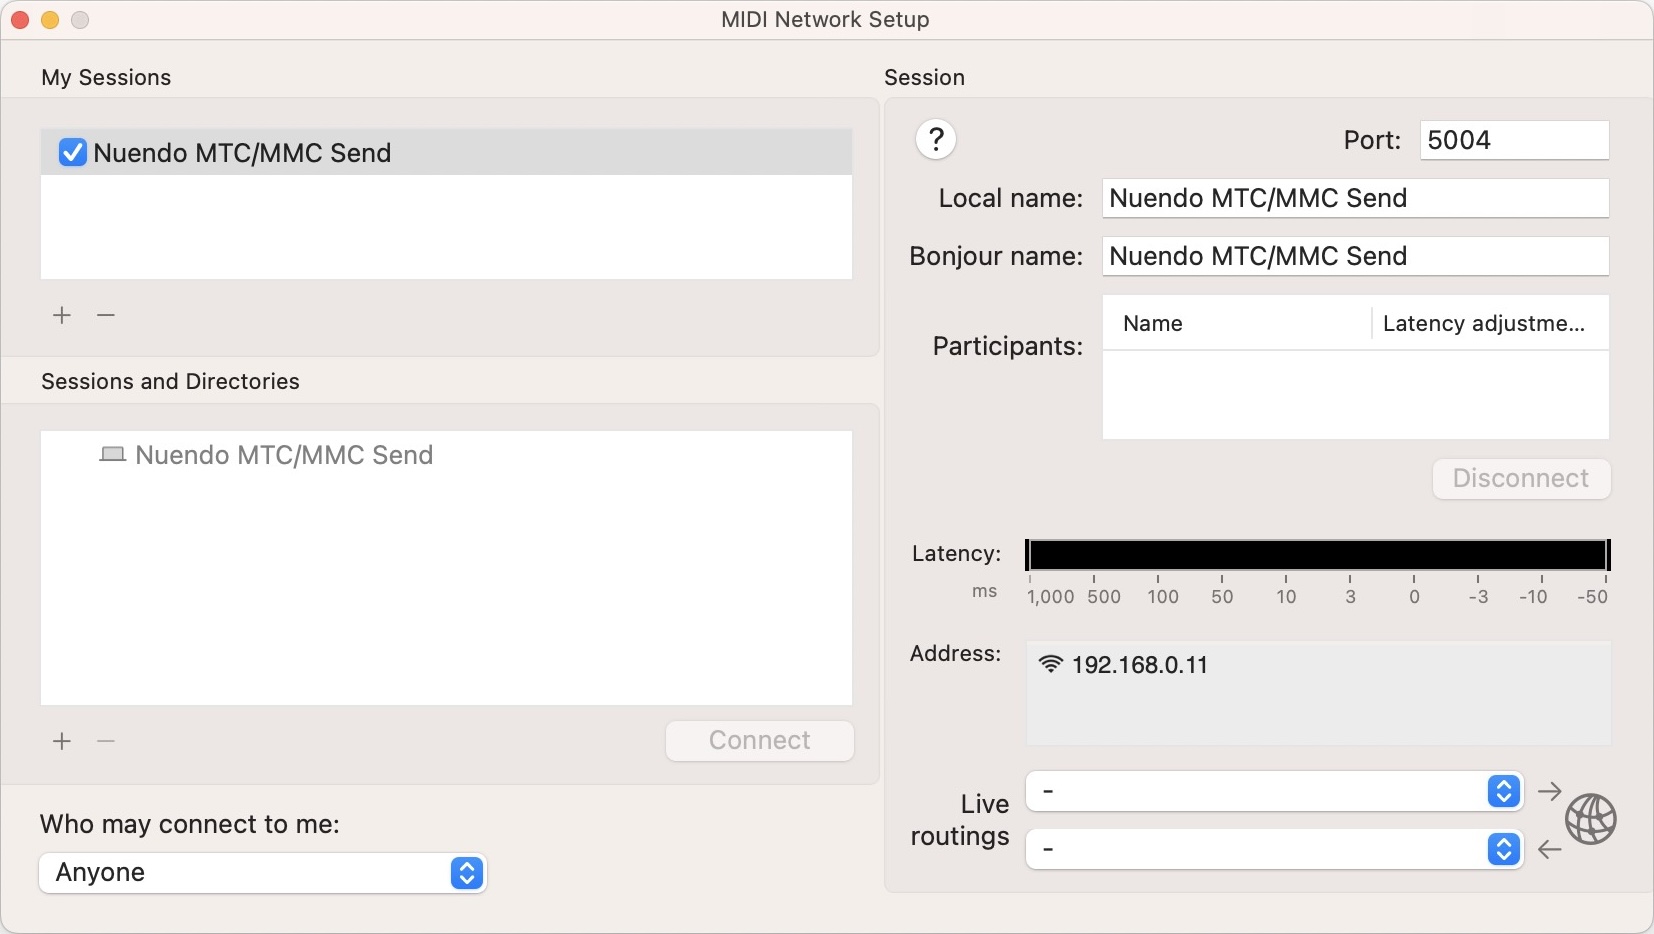 MIDI Network Setup - Send Session created